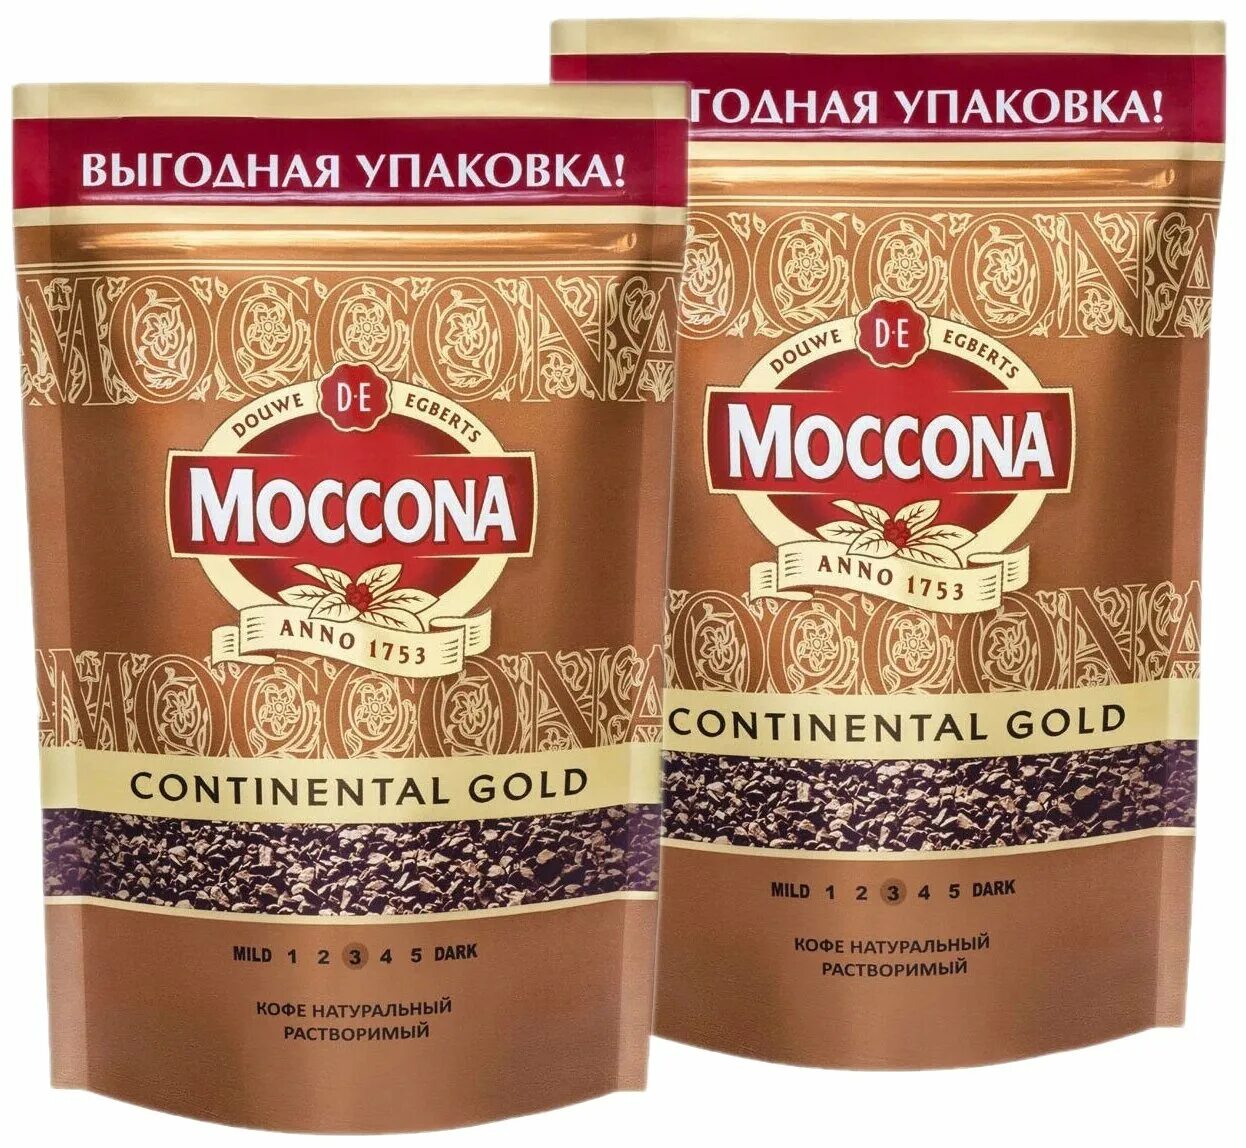 Moccona continental gold. Кофе растворимый Moccona Continental. Кофе Моккона Континенталь Голд 75г. Moccona Continental Gold кофе растворимый 95г.